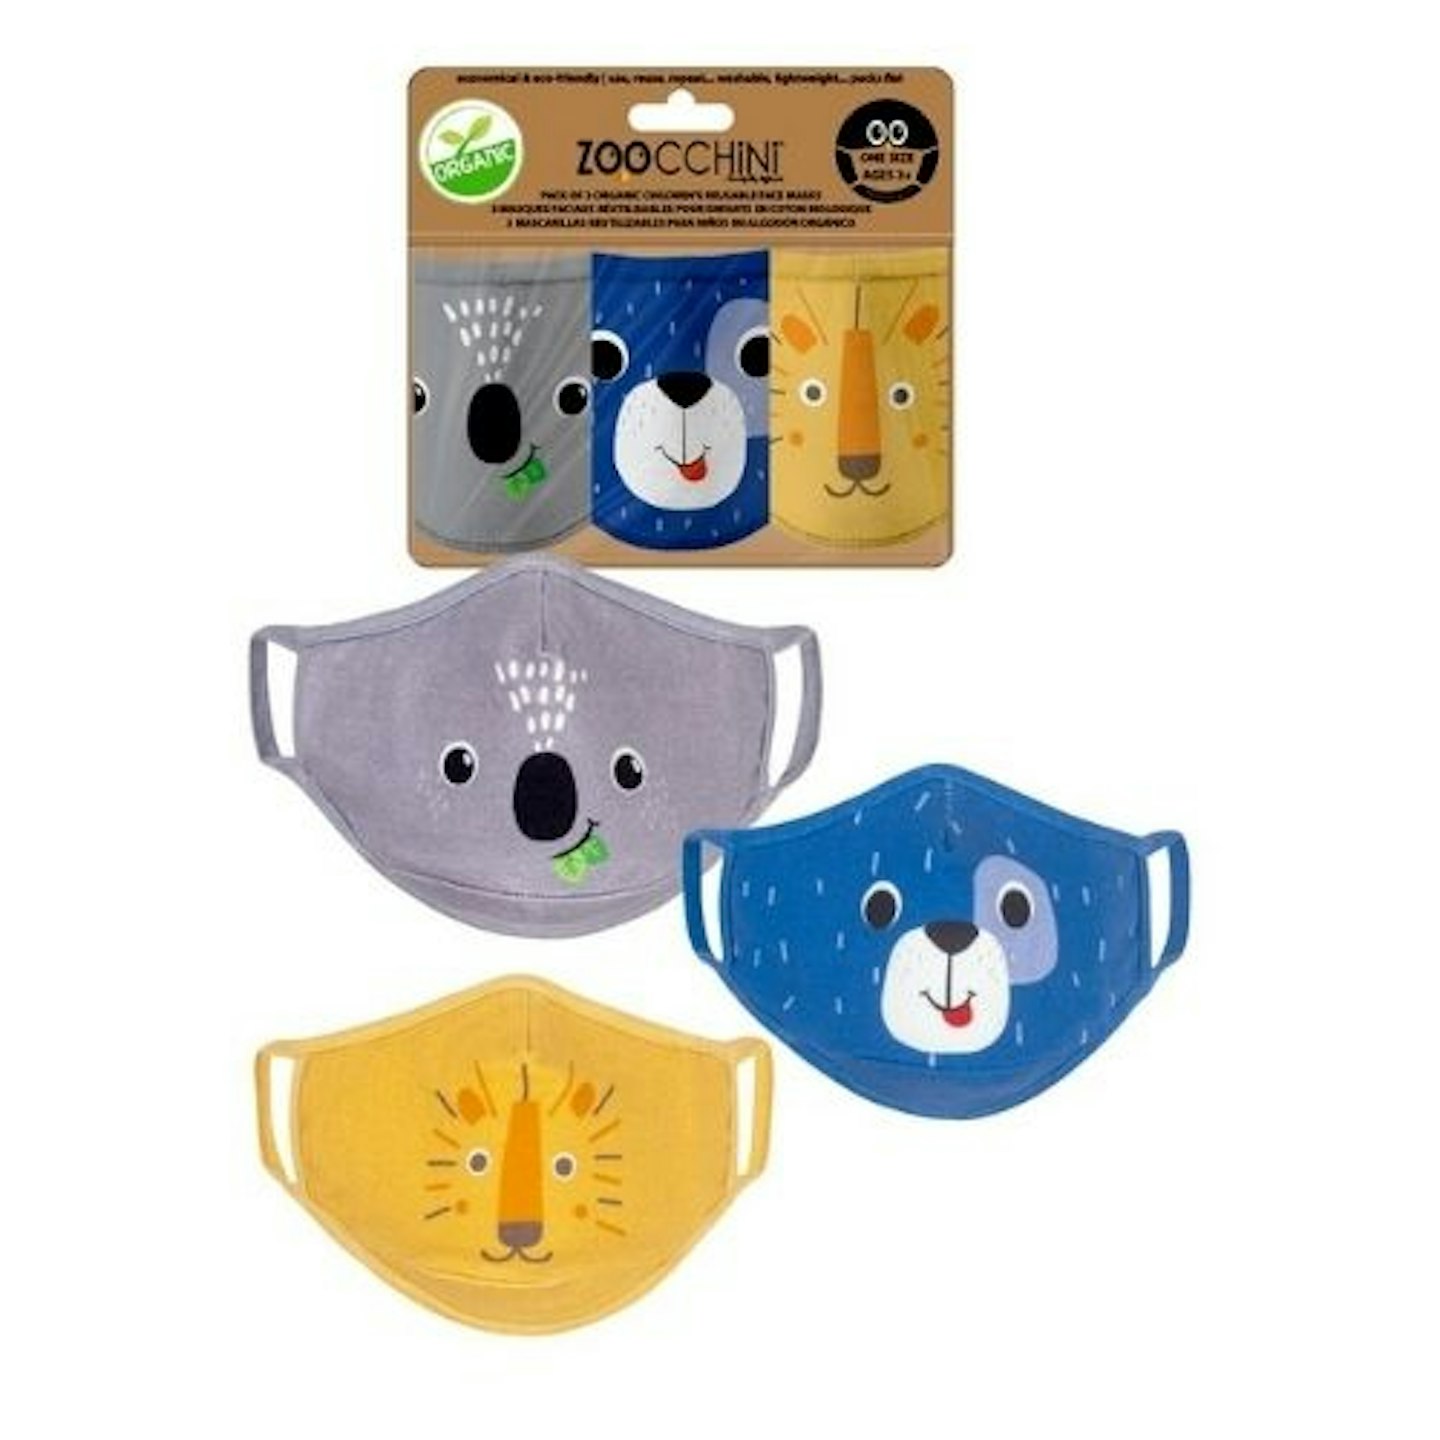 Zoocchini - Reusable Organic Kids Face Masks